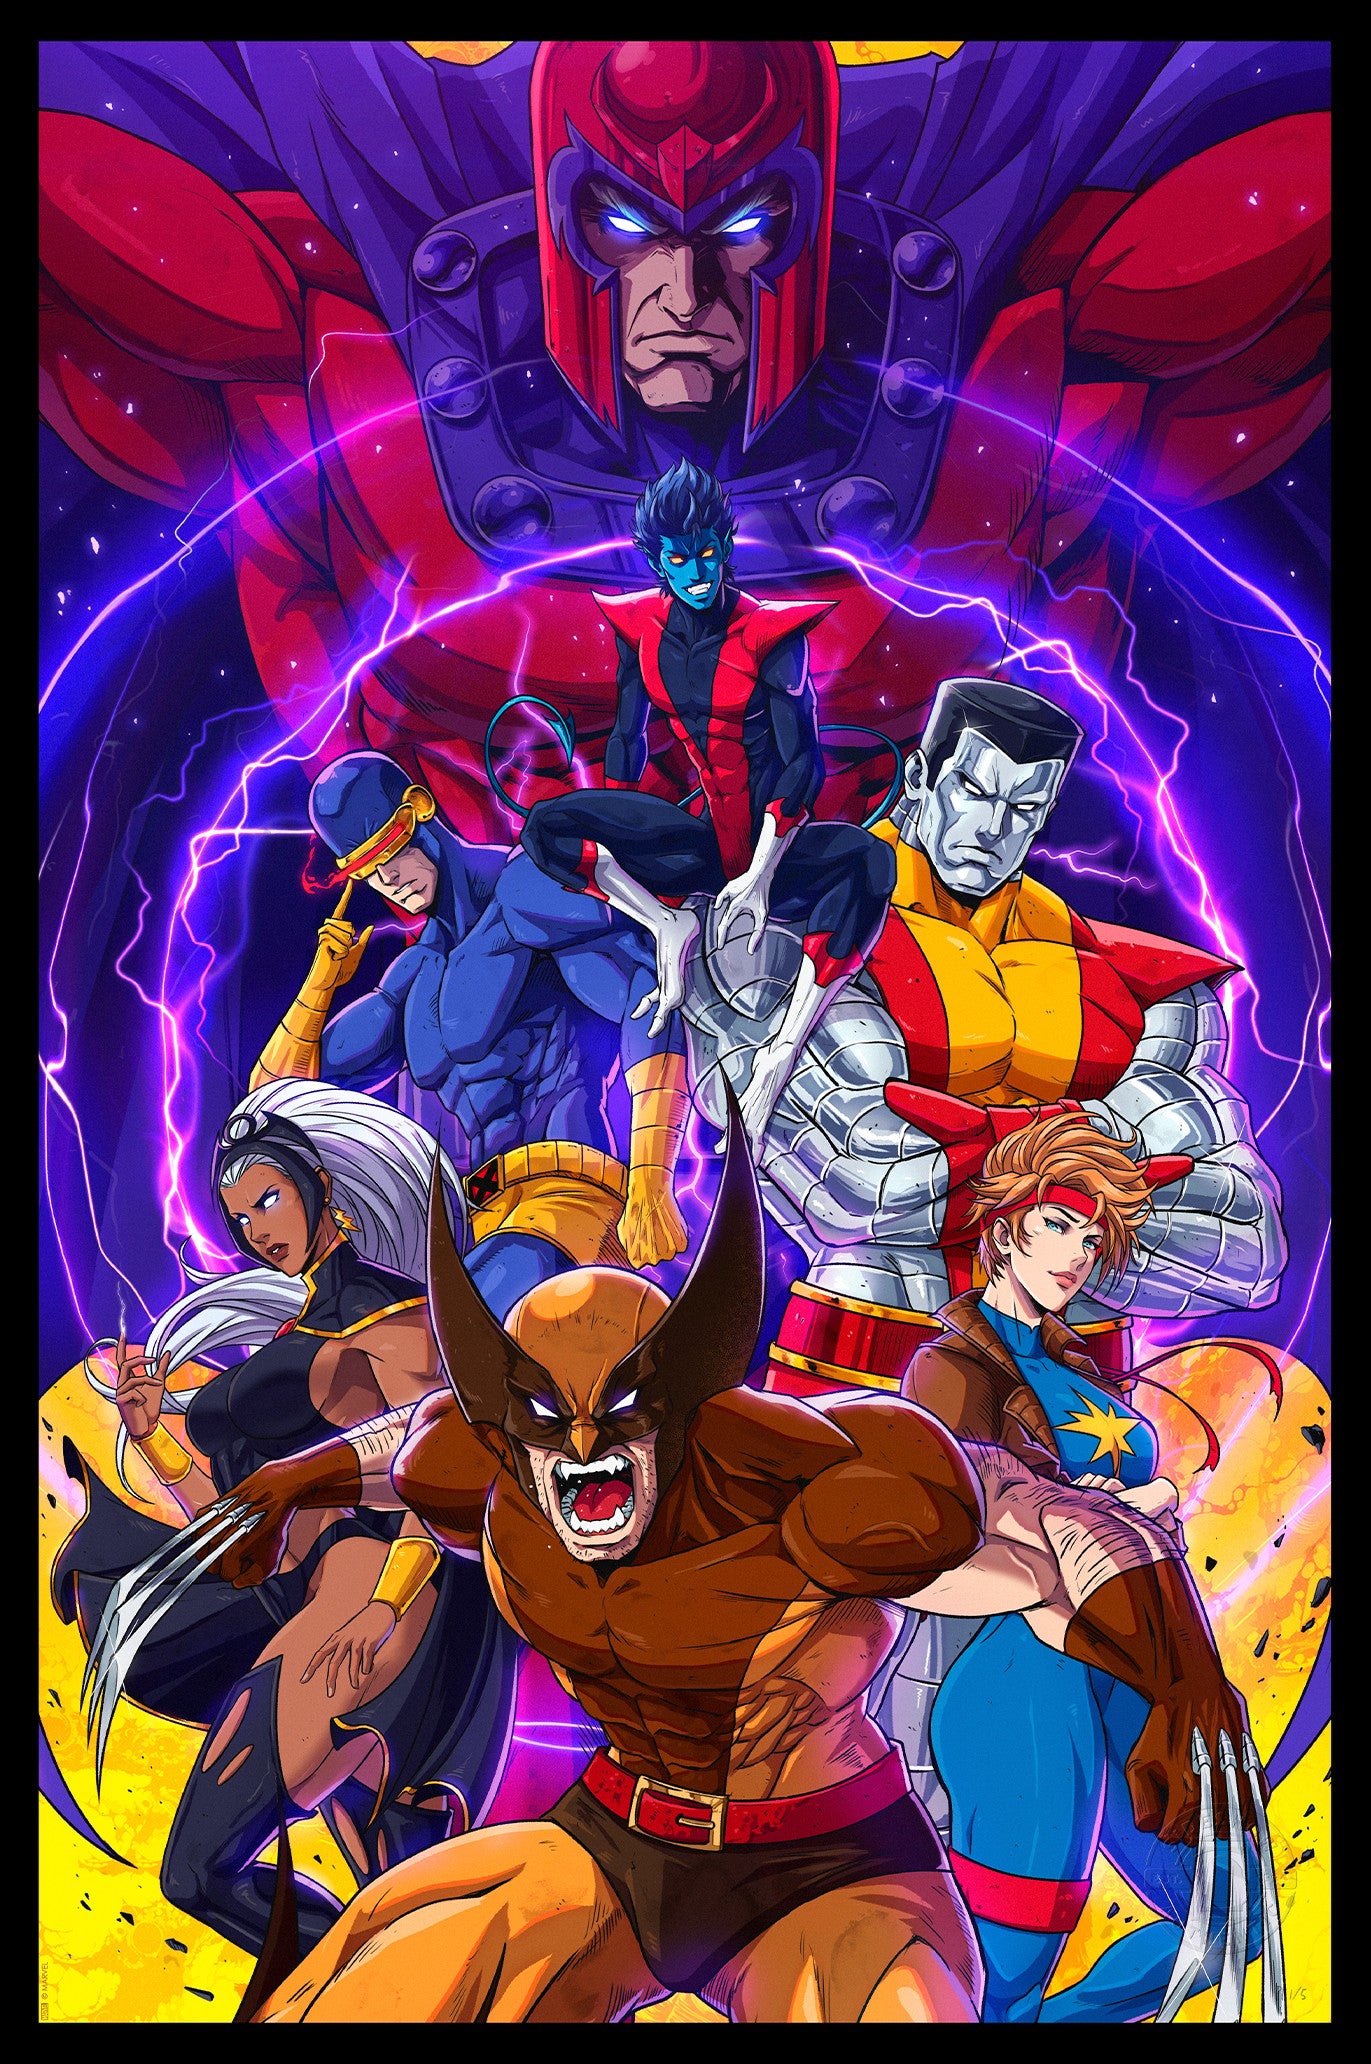 Sideshow Art Print: Marvel X Men - The Uncanny X-Men Litografia